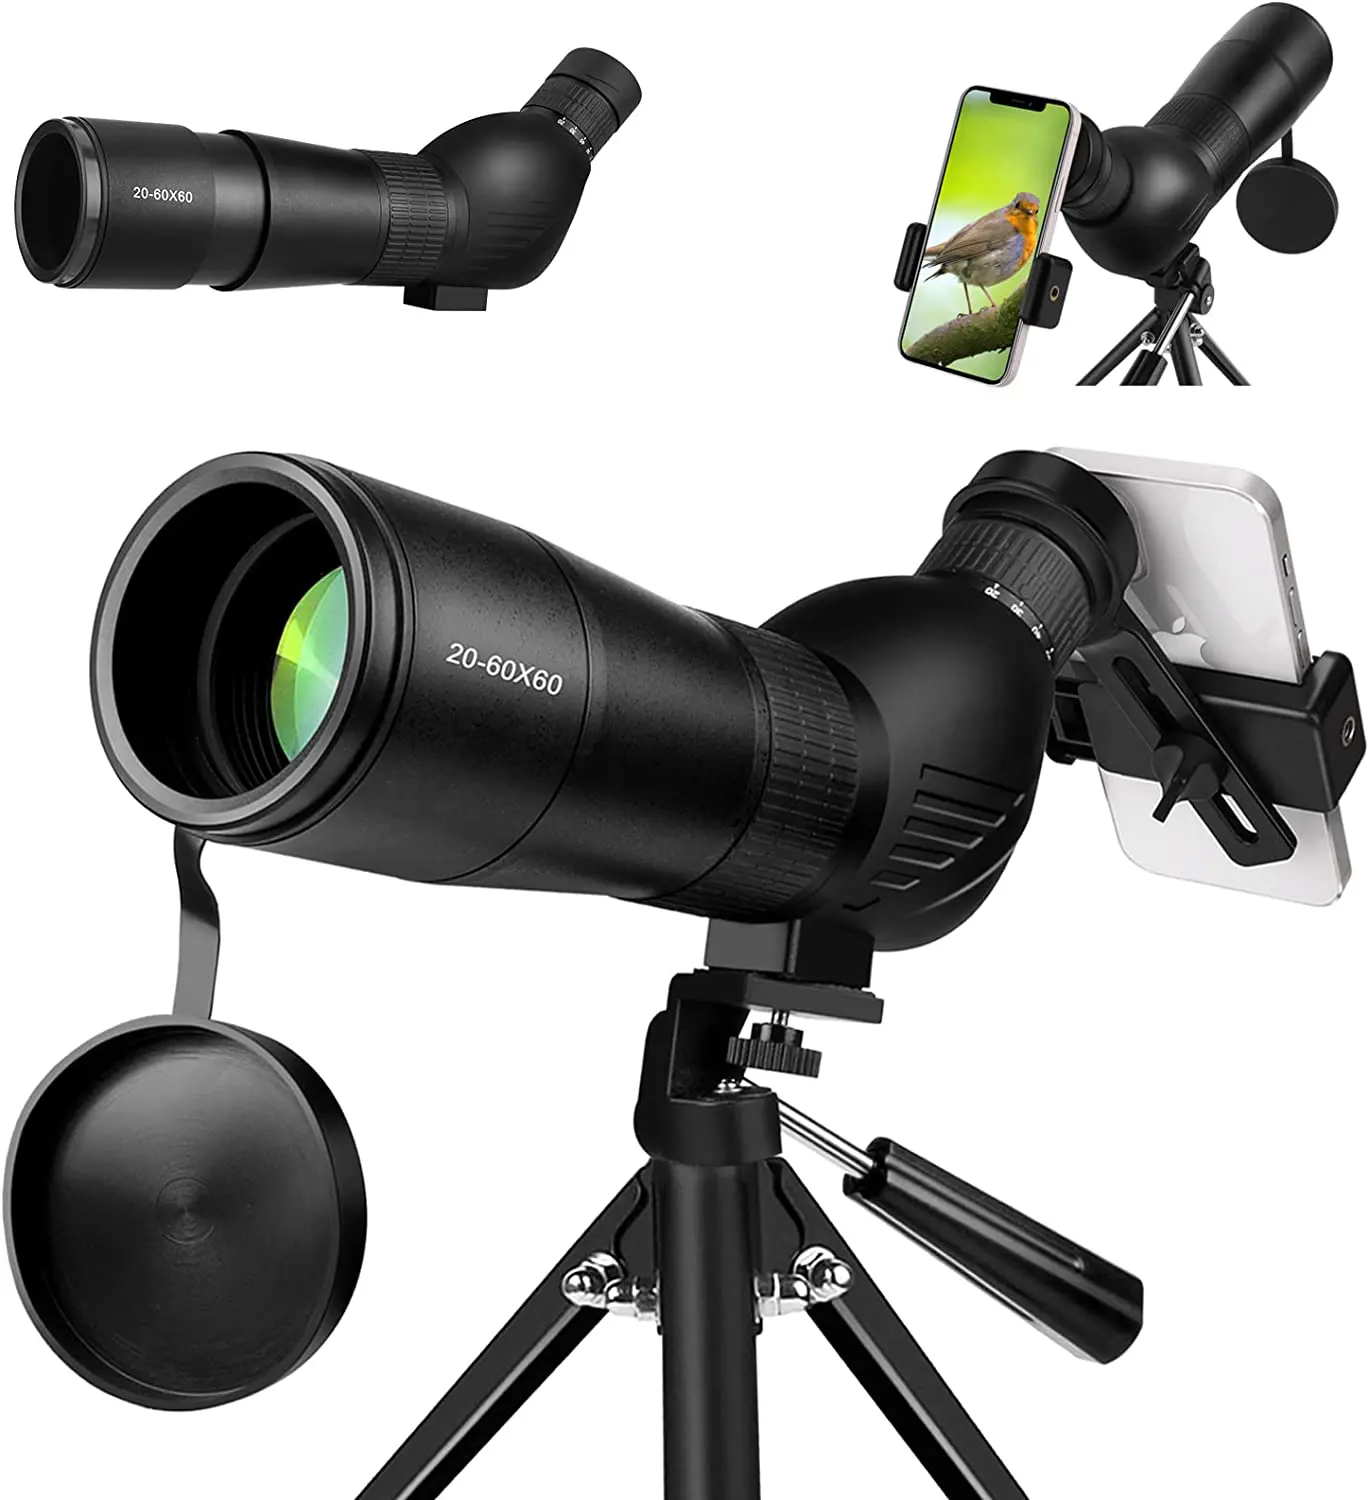 SUNCORE-lente FMC con Zoom de 39-19m/1000m, lente BAK4 de 45 grados, lente angular a prueba de niebla, 20-60x 60mm